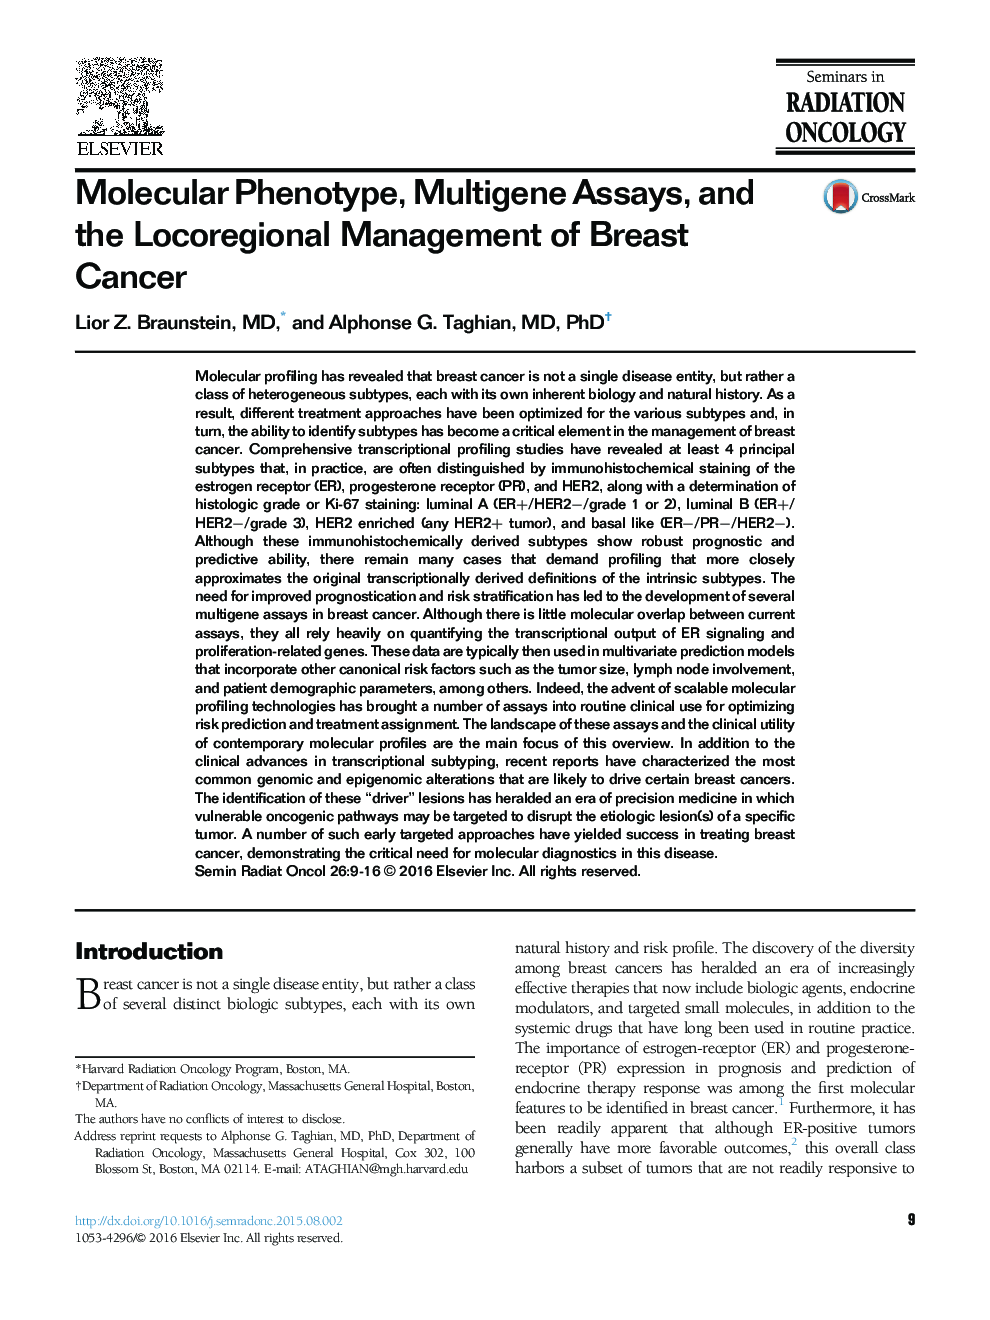 Molecular Phenotype, Multigene Assays, and the Locoregional Management of Breast Cancer 